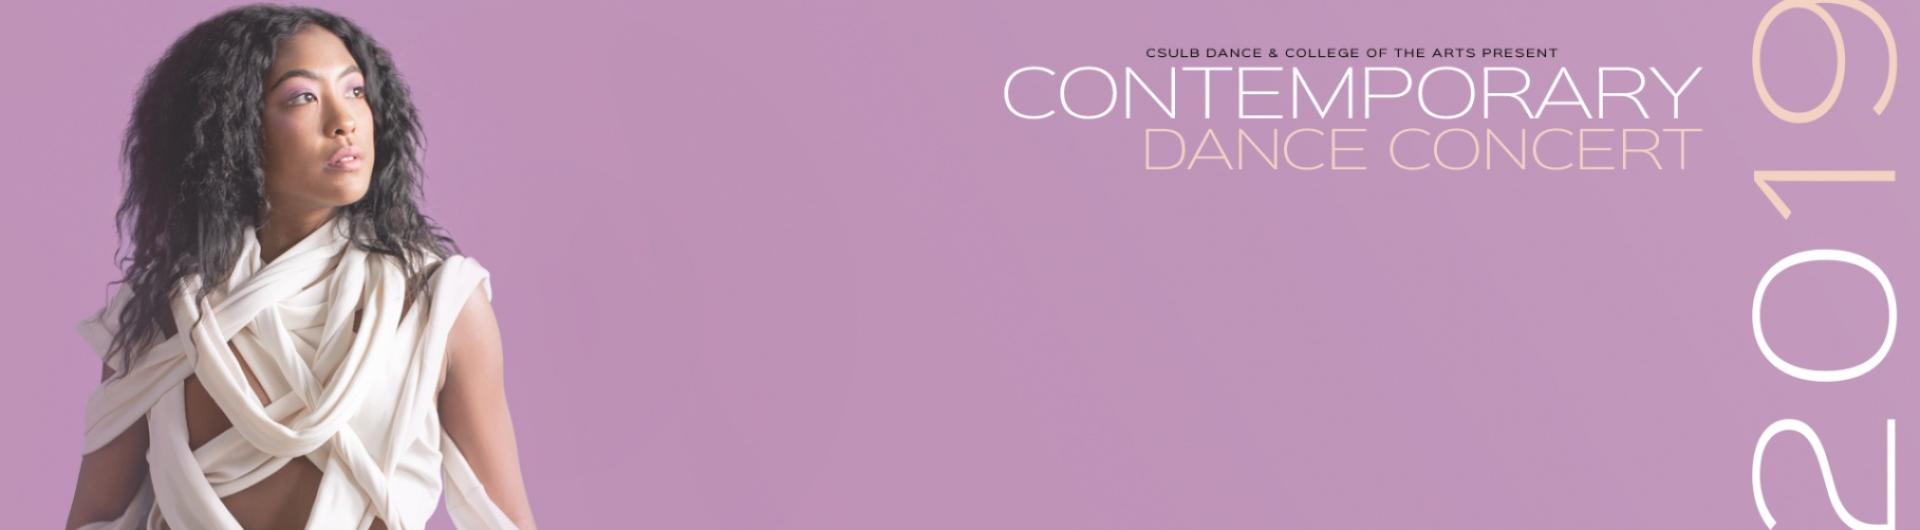 2019 Contemporary Dance Concert Poster